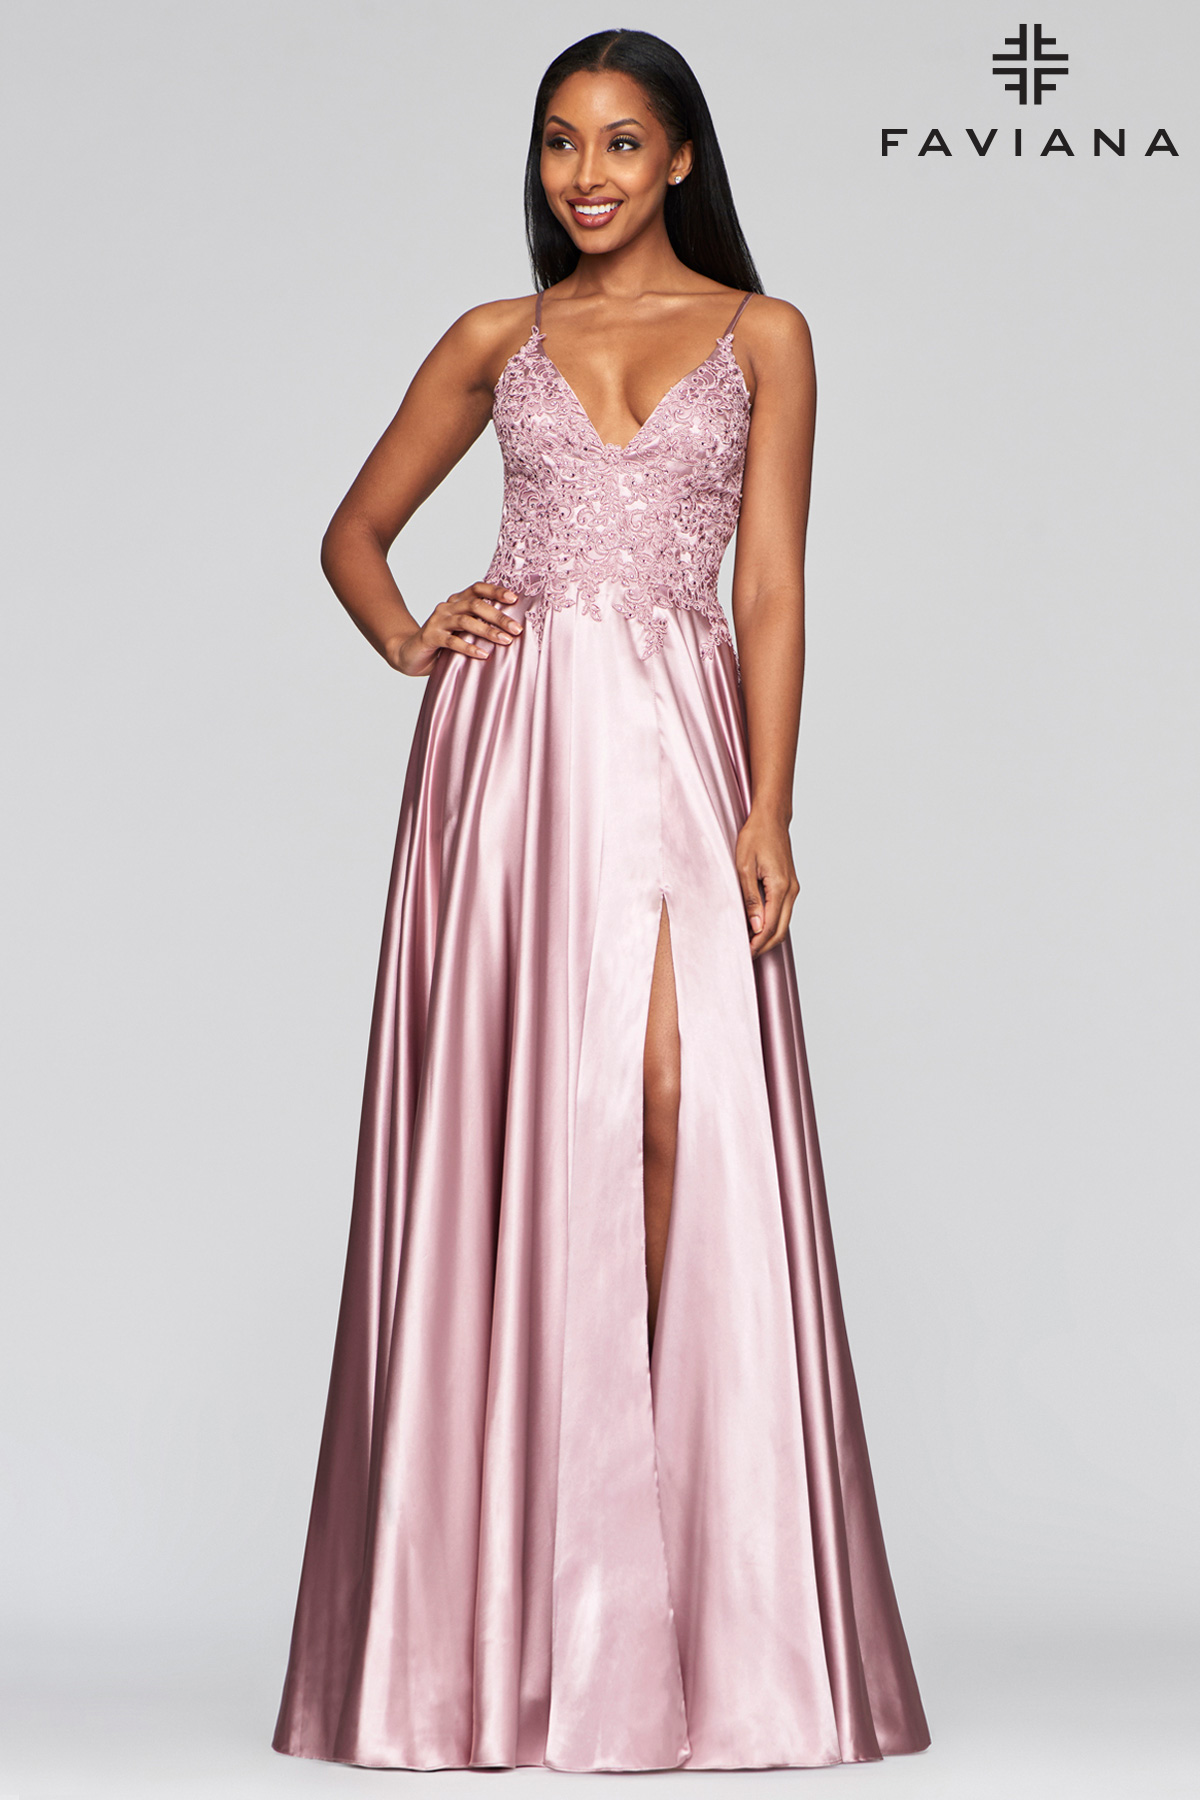 Faviana S10400 Style Prom Dress